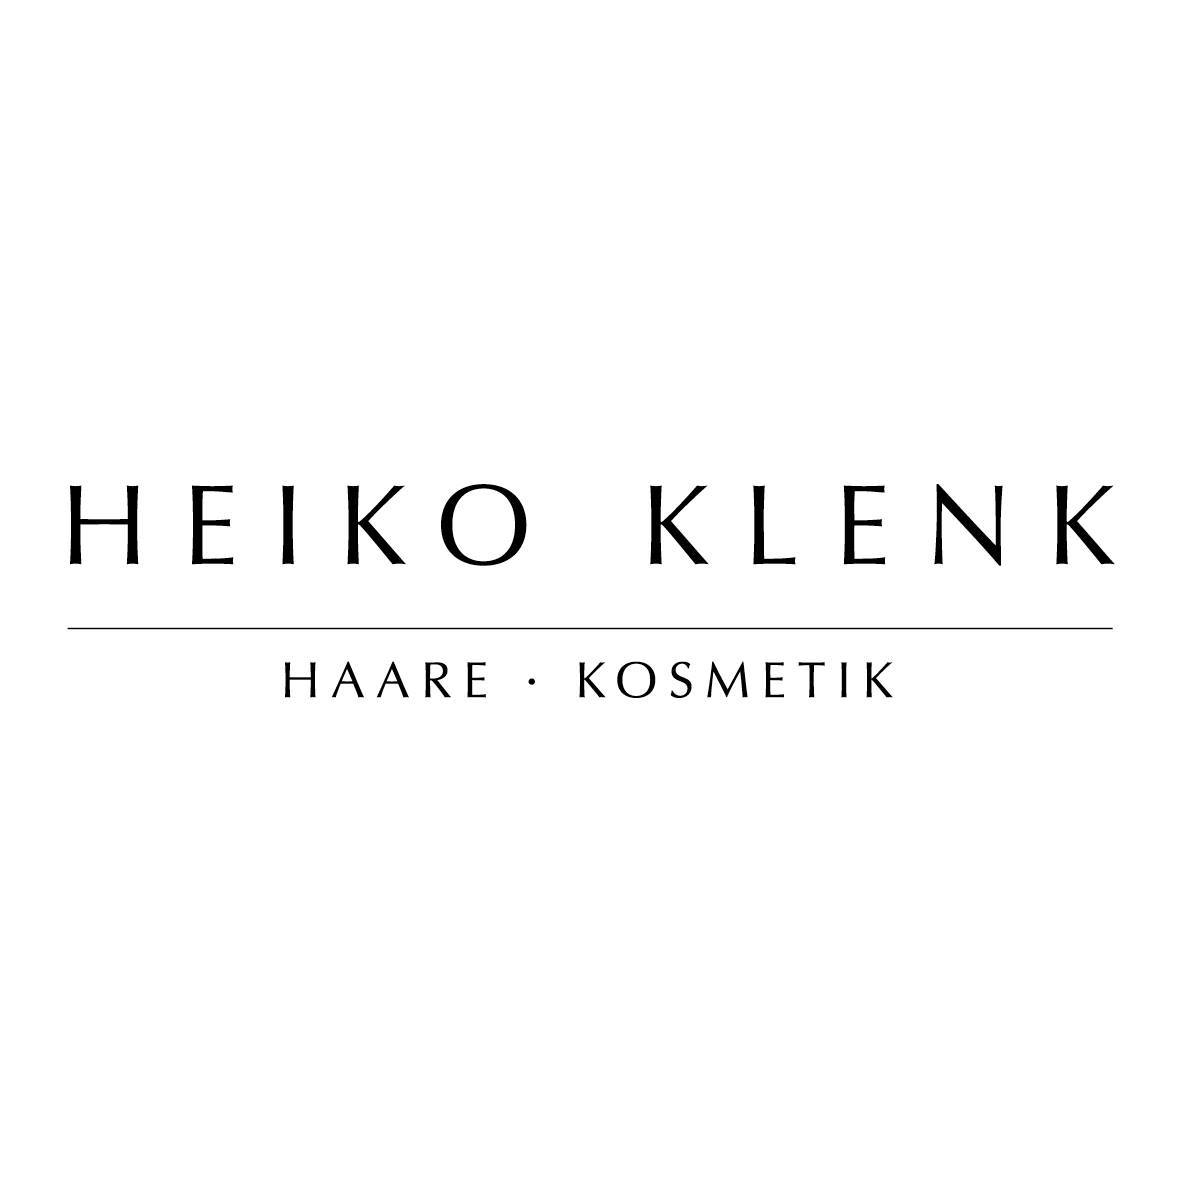 HEIKO KLENK Haare Kosmetik Friseur in Neckarsulm & Umgebung in Neckarsulm - Logo